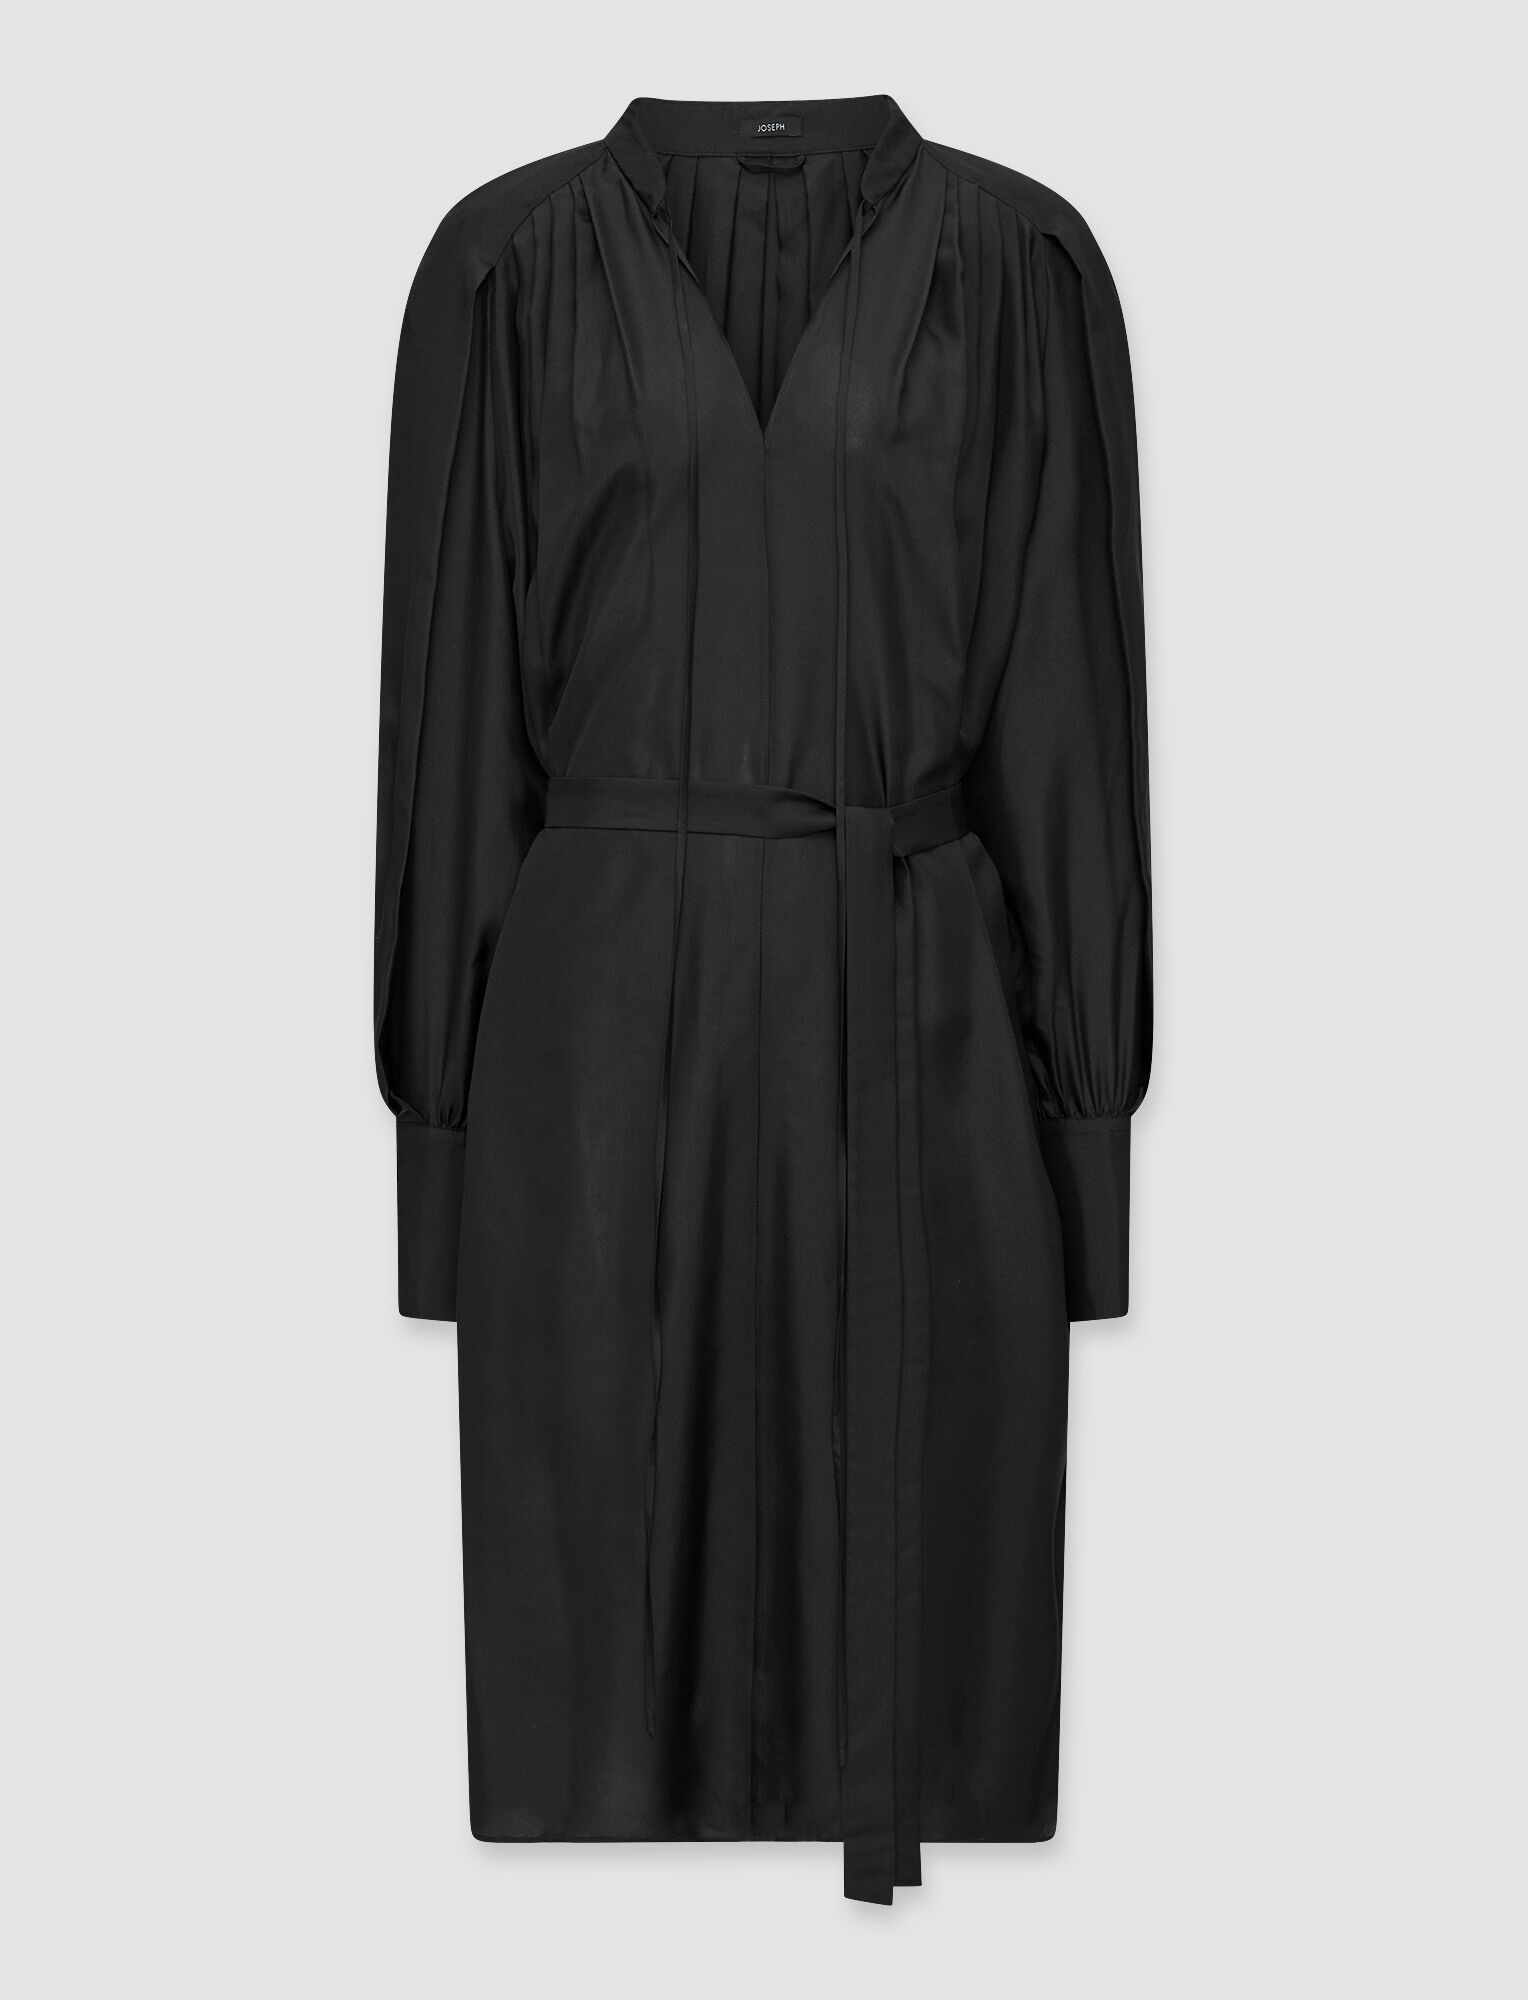 Joseph, Silk Habotai Dewar Dress, in Black